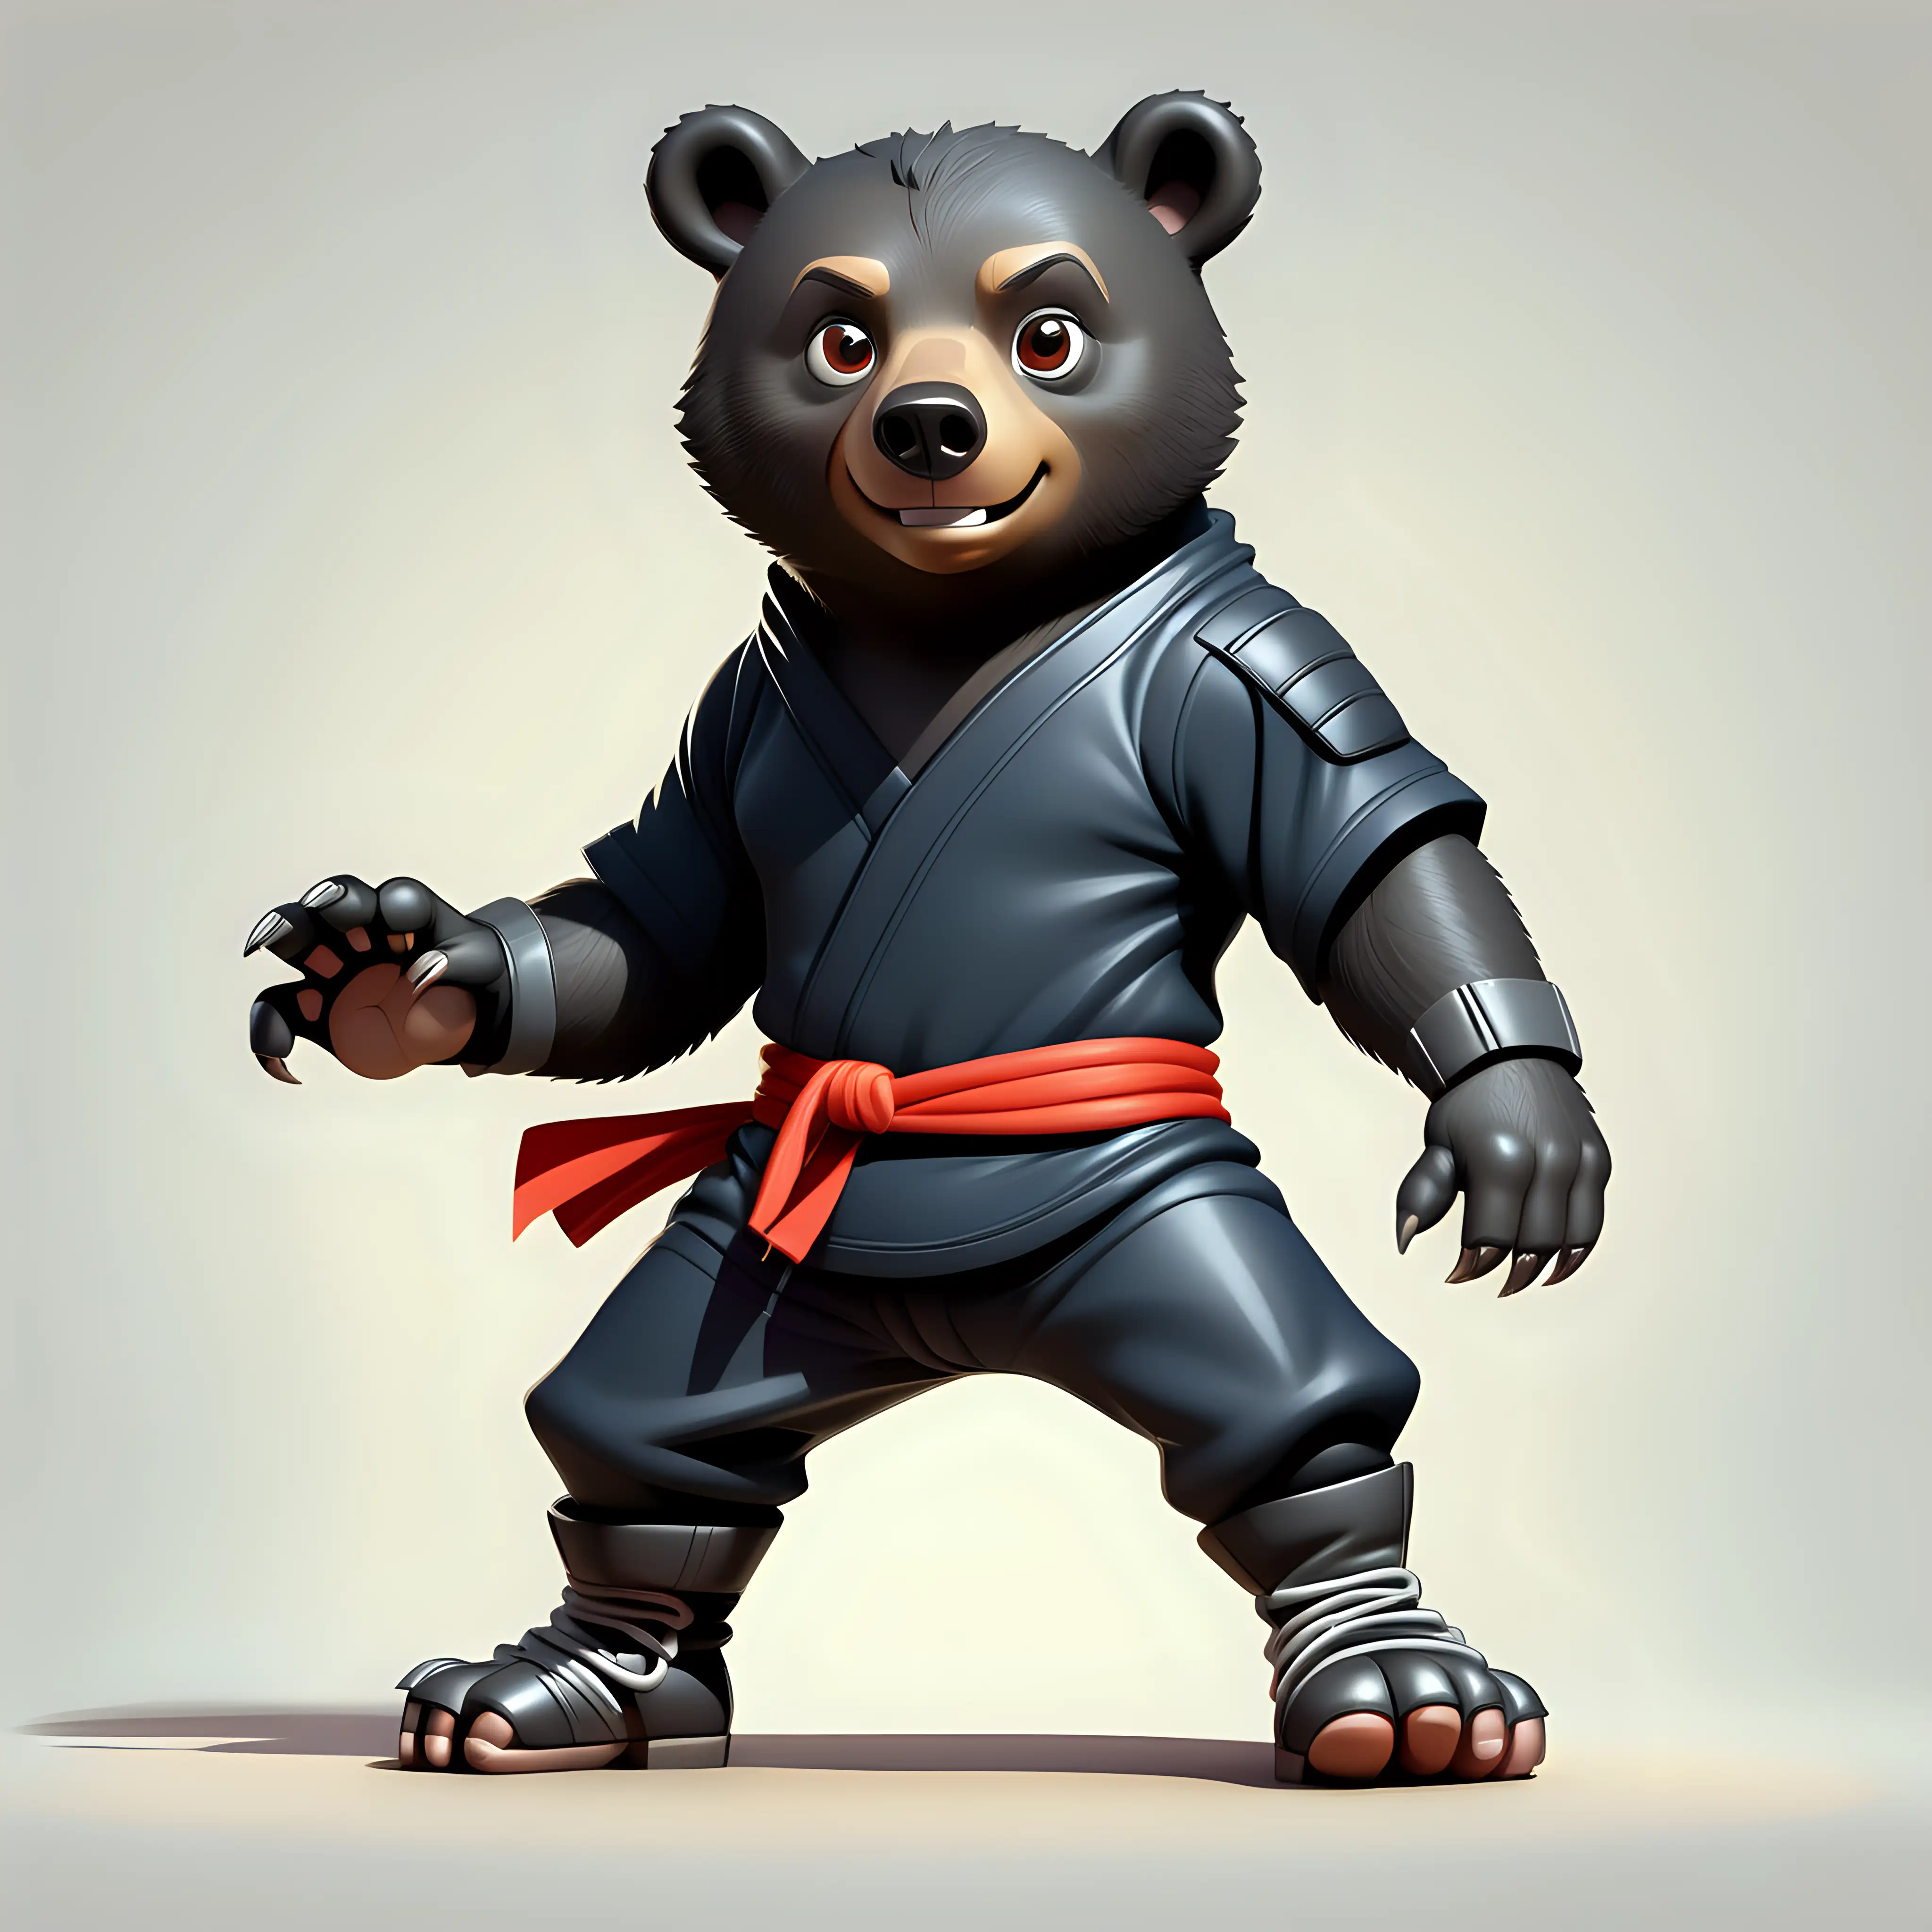 Cartoon Black Bear Ninja with Two Feet Fun and Playful Illustration